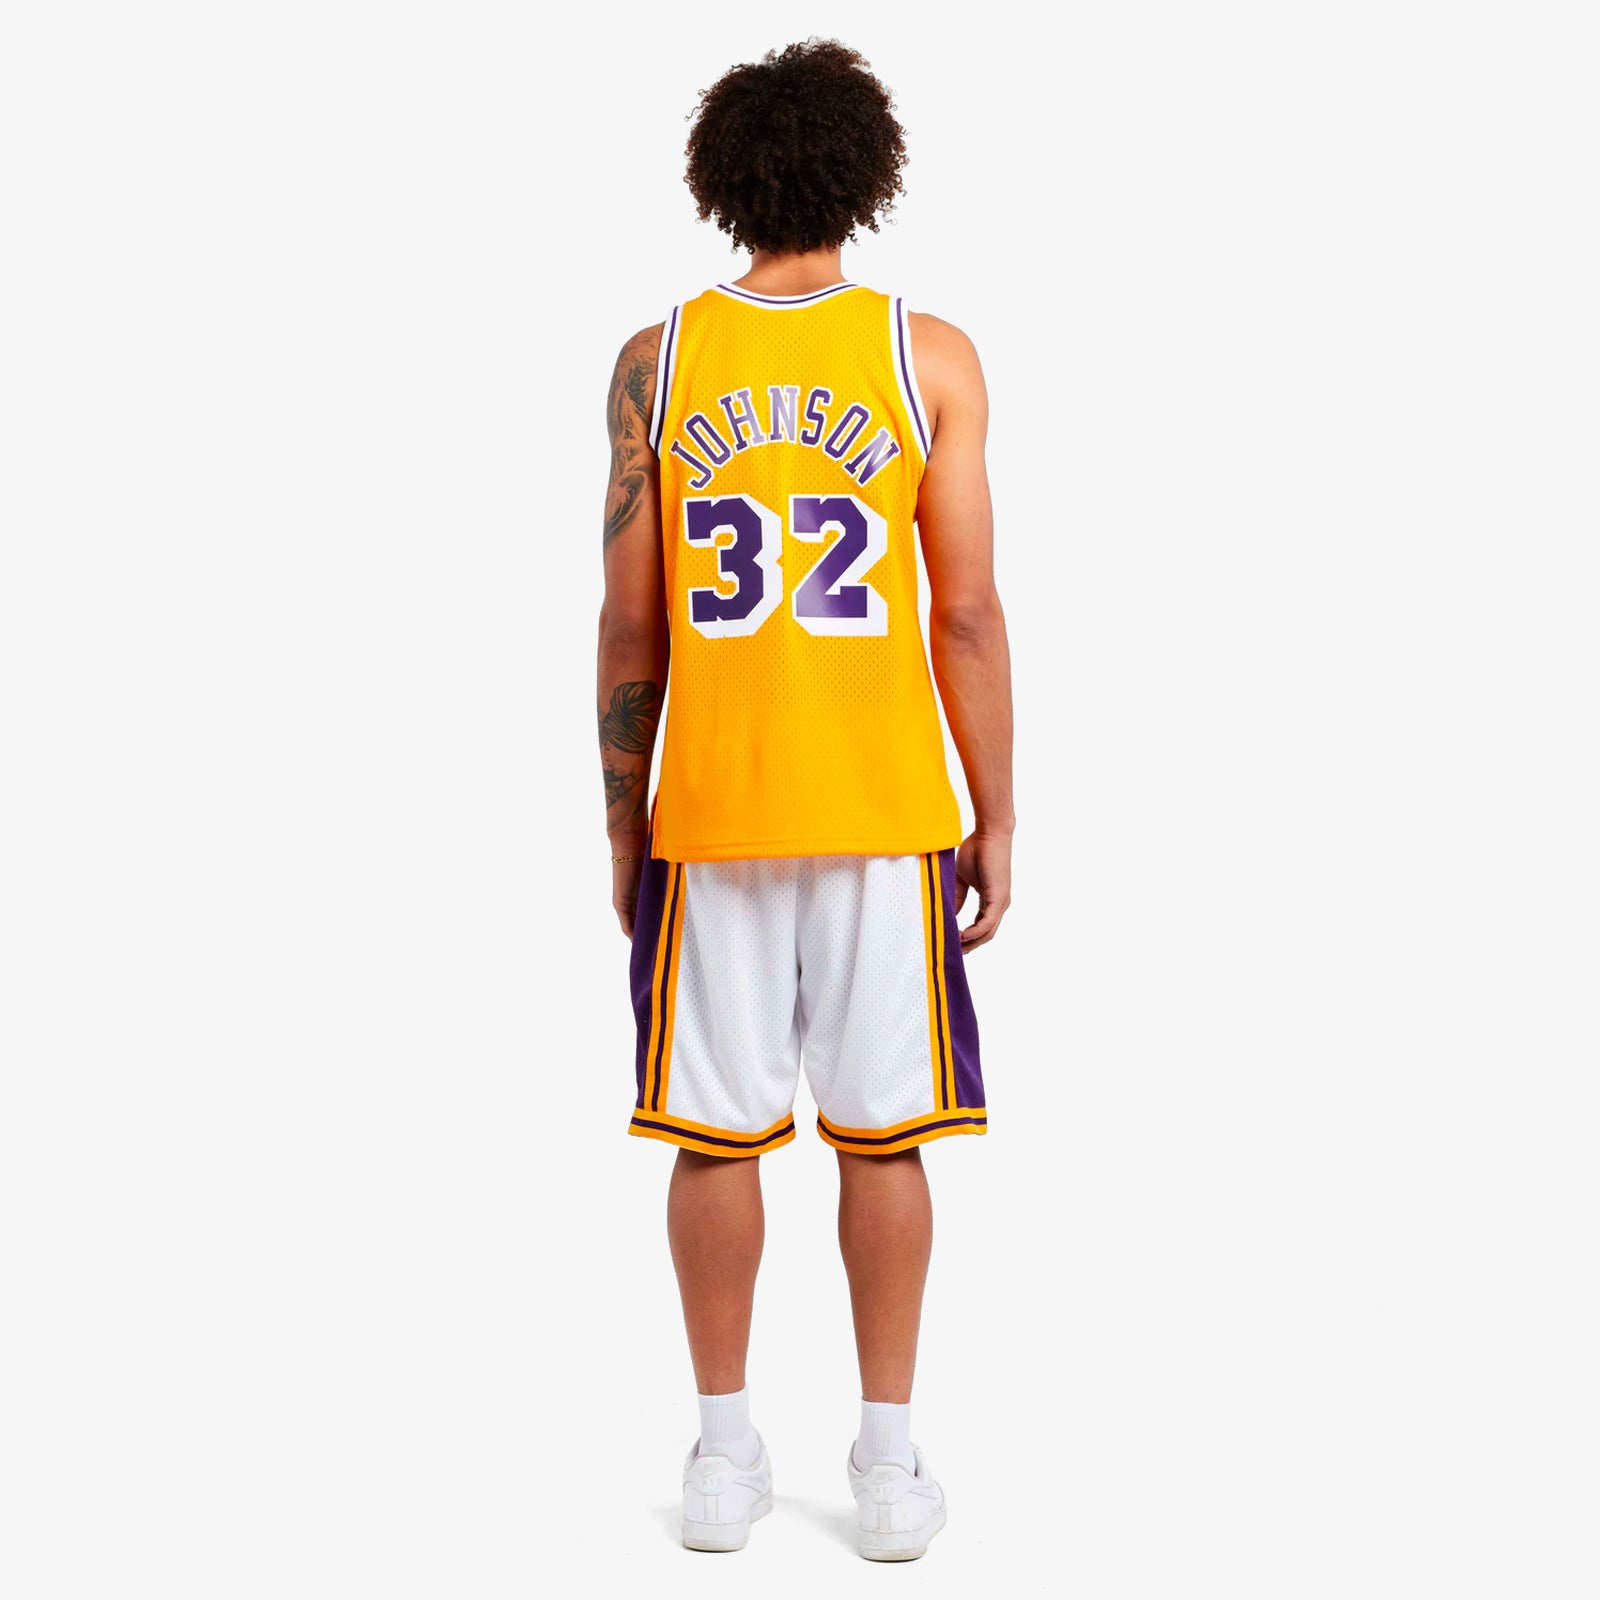 Los Angeles Lakers Mens Apparel & Gifts, Mens Lakers Clothing